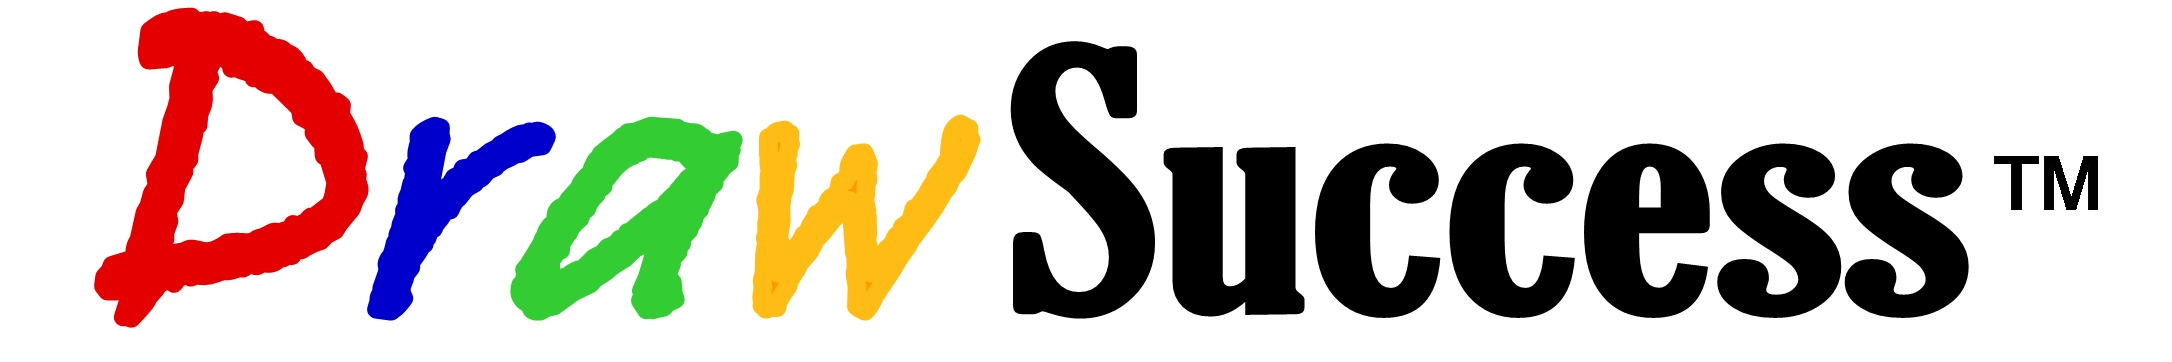 drawsuccess name logo with yellow